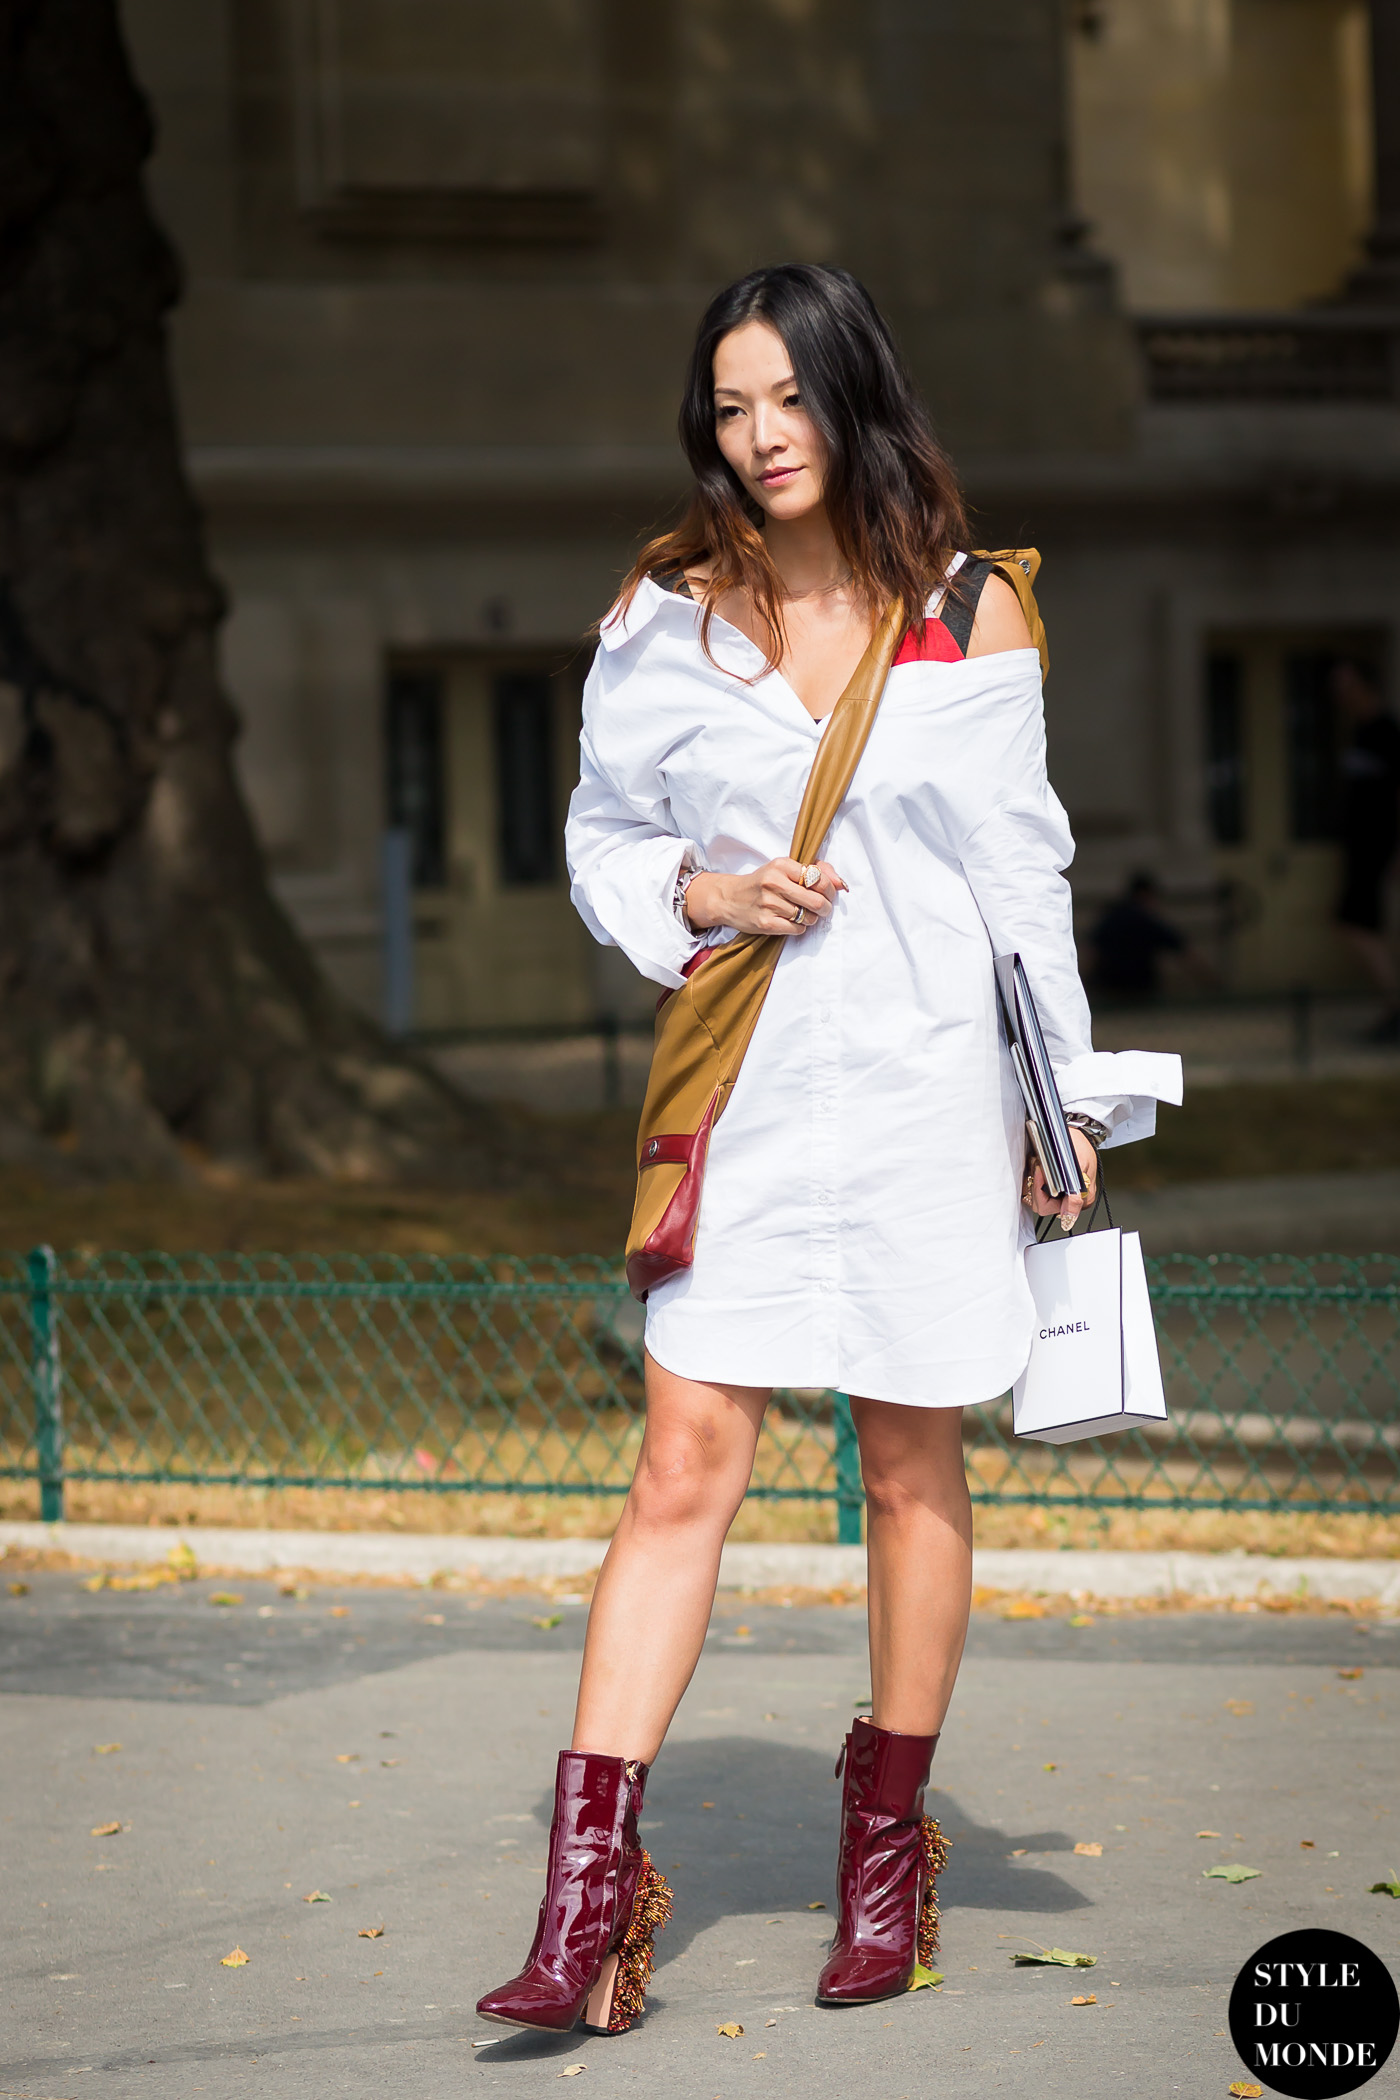 Haute Couture Fall 2015 Street Style: Tina Leung - STYLE DU MONDE ...